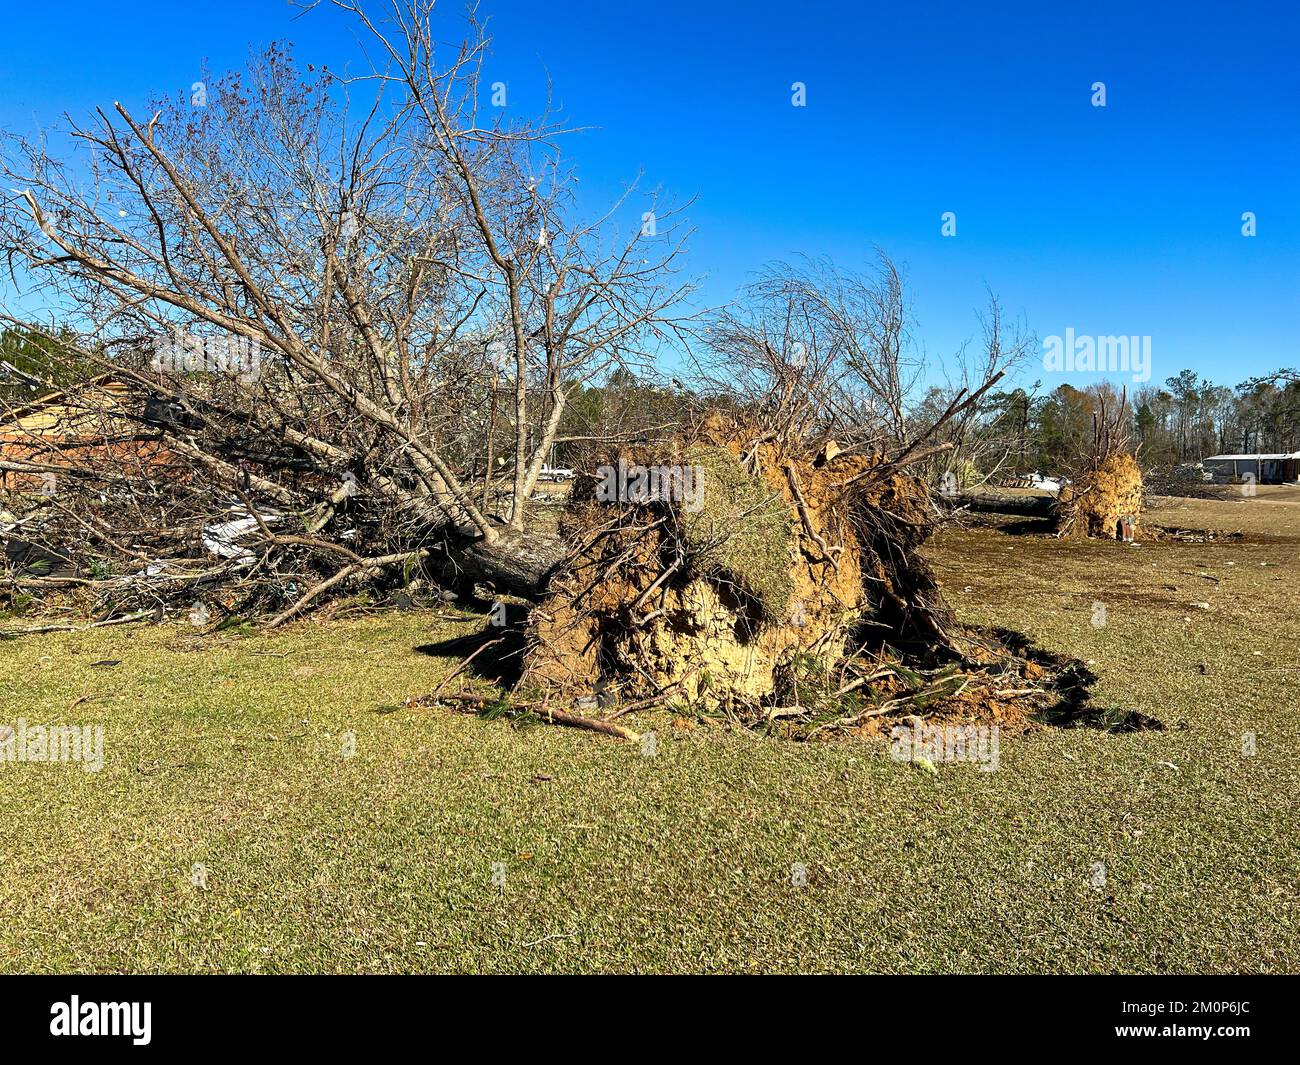 Tree fallen over due to tornado damage Stock Photo